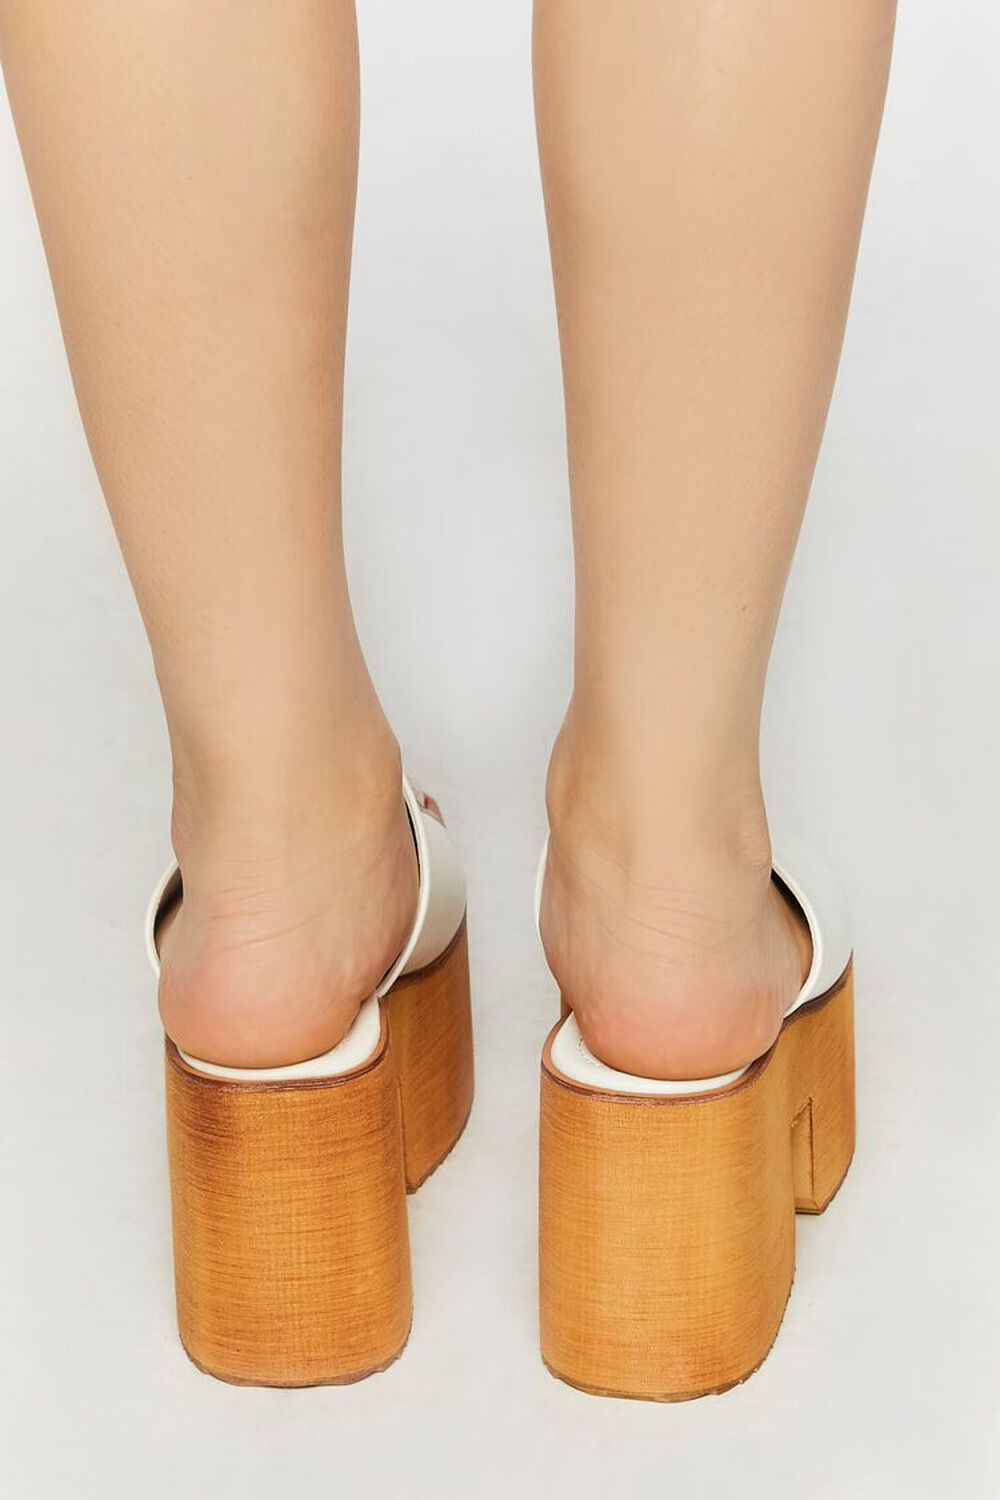 WHITE Faux Leather Platform Sandals, image 3